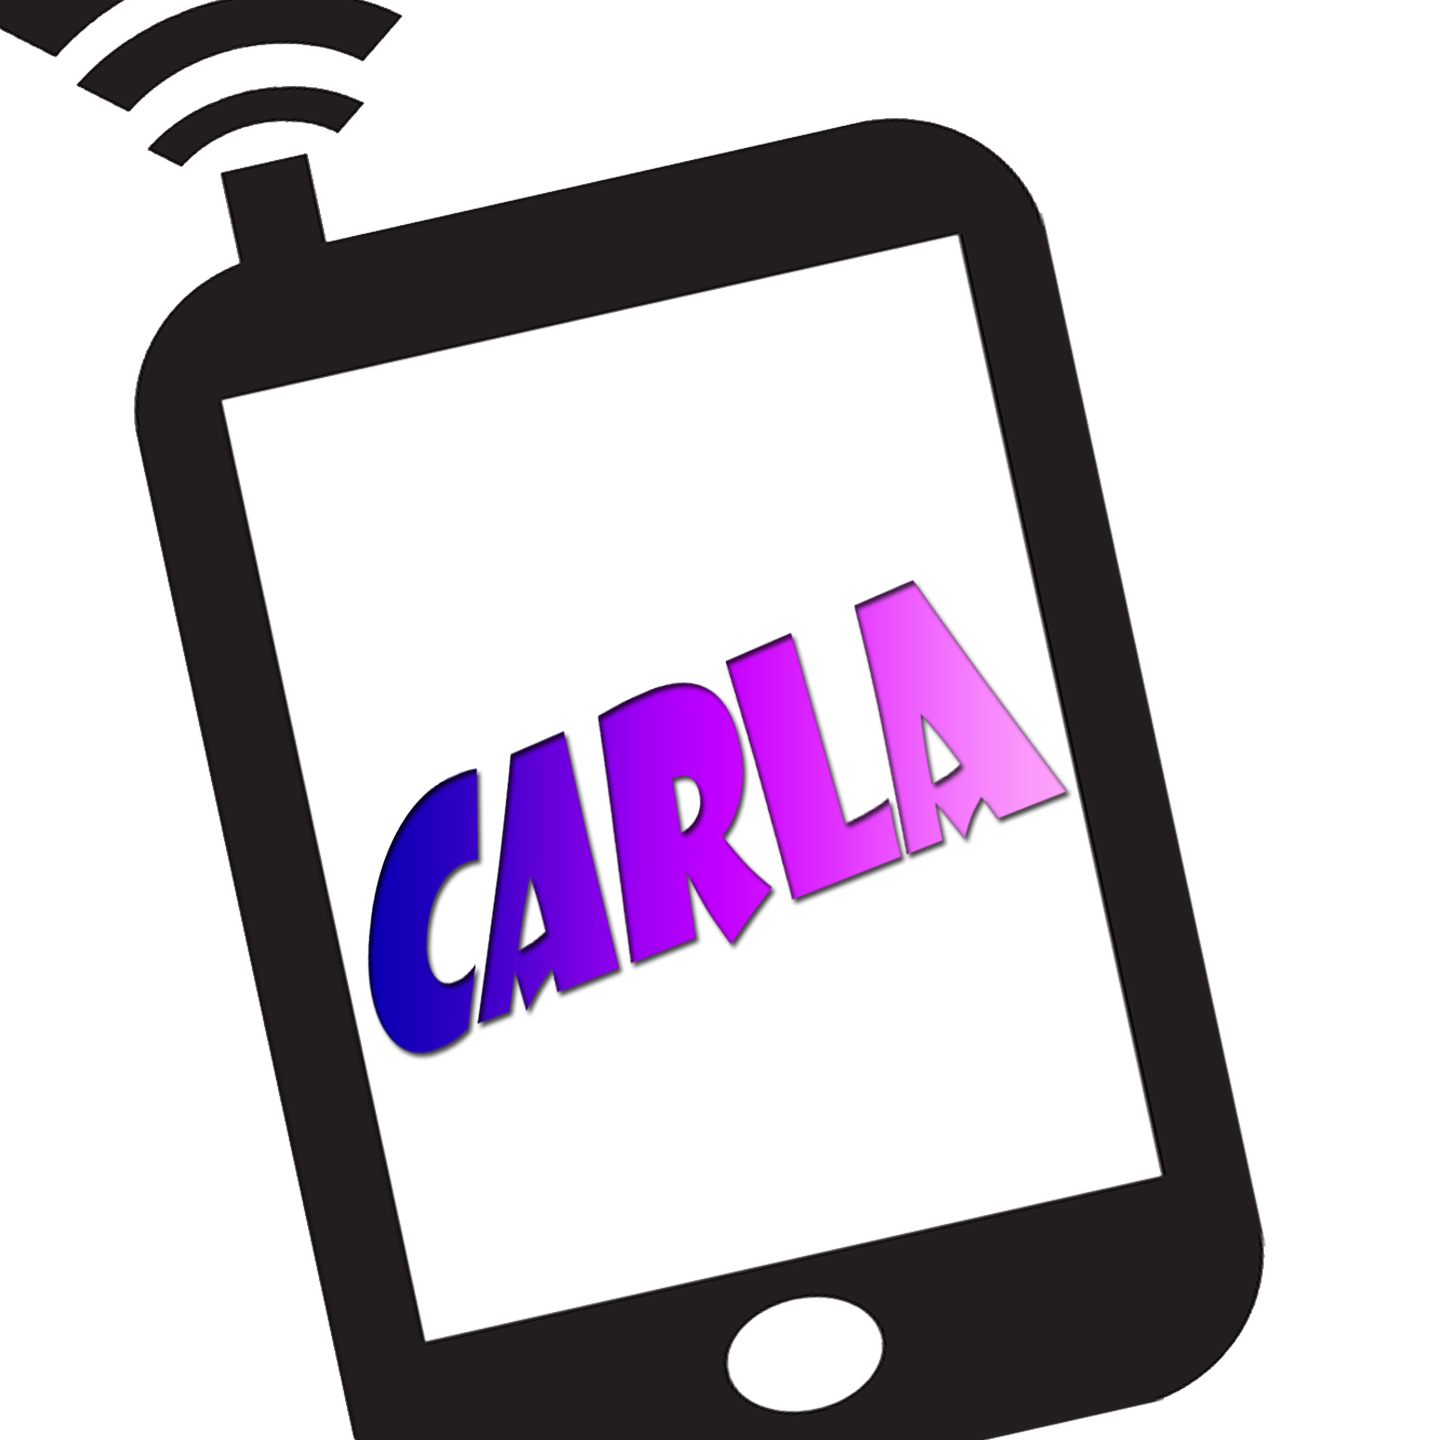 Carla is calling you